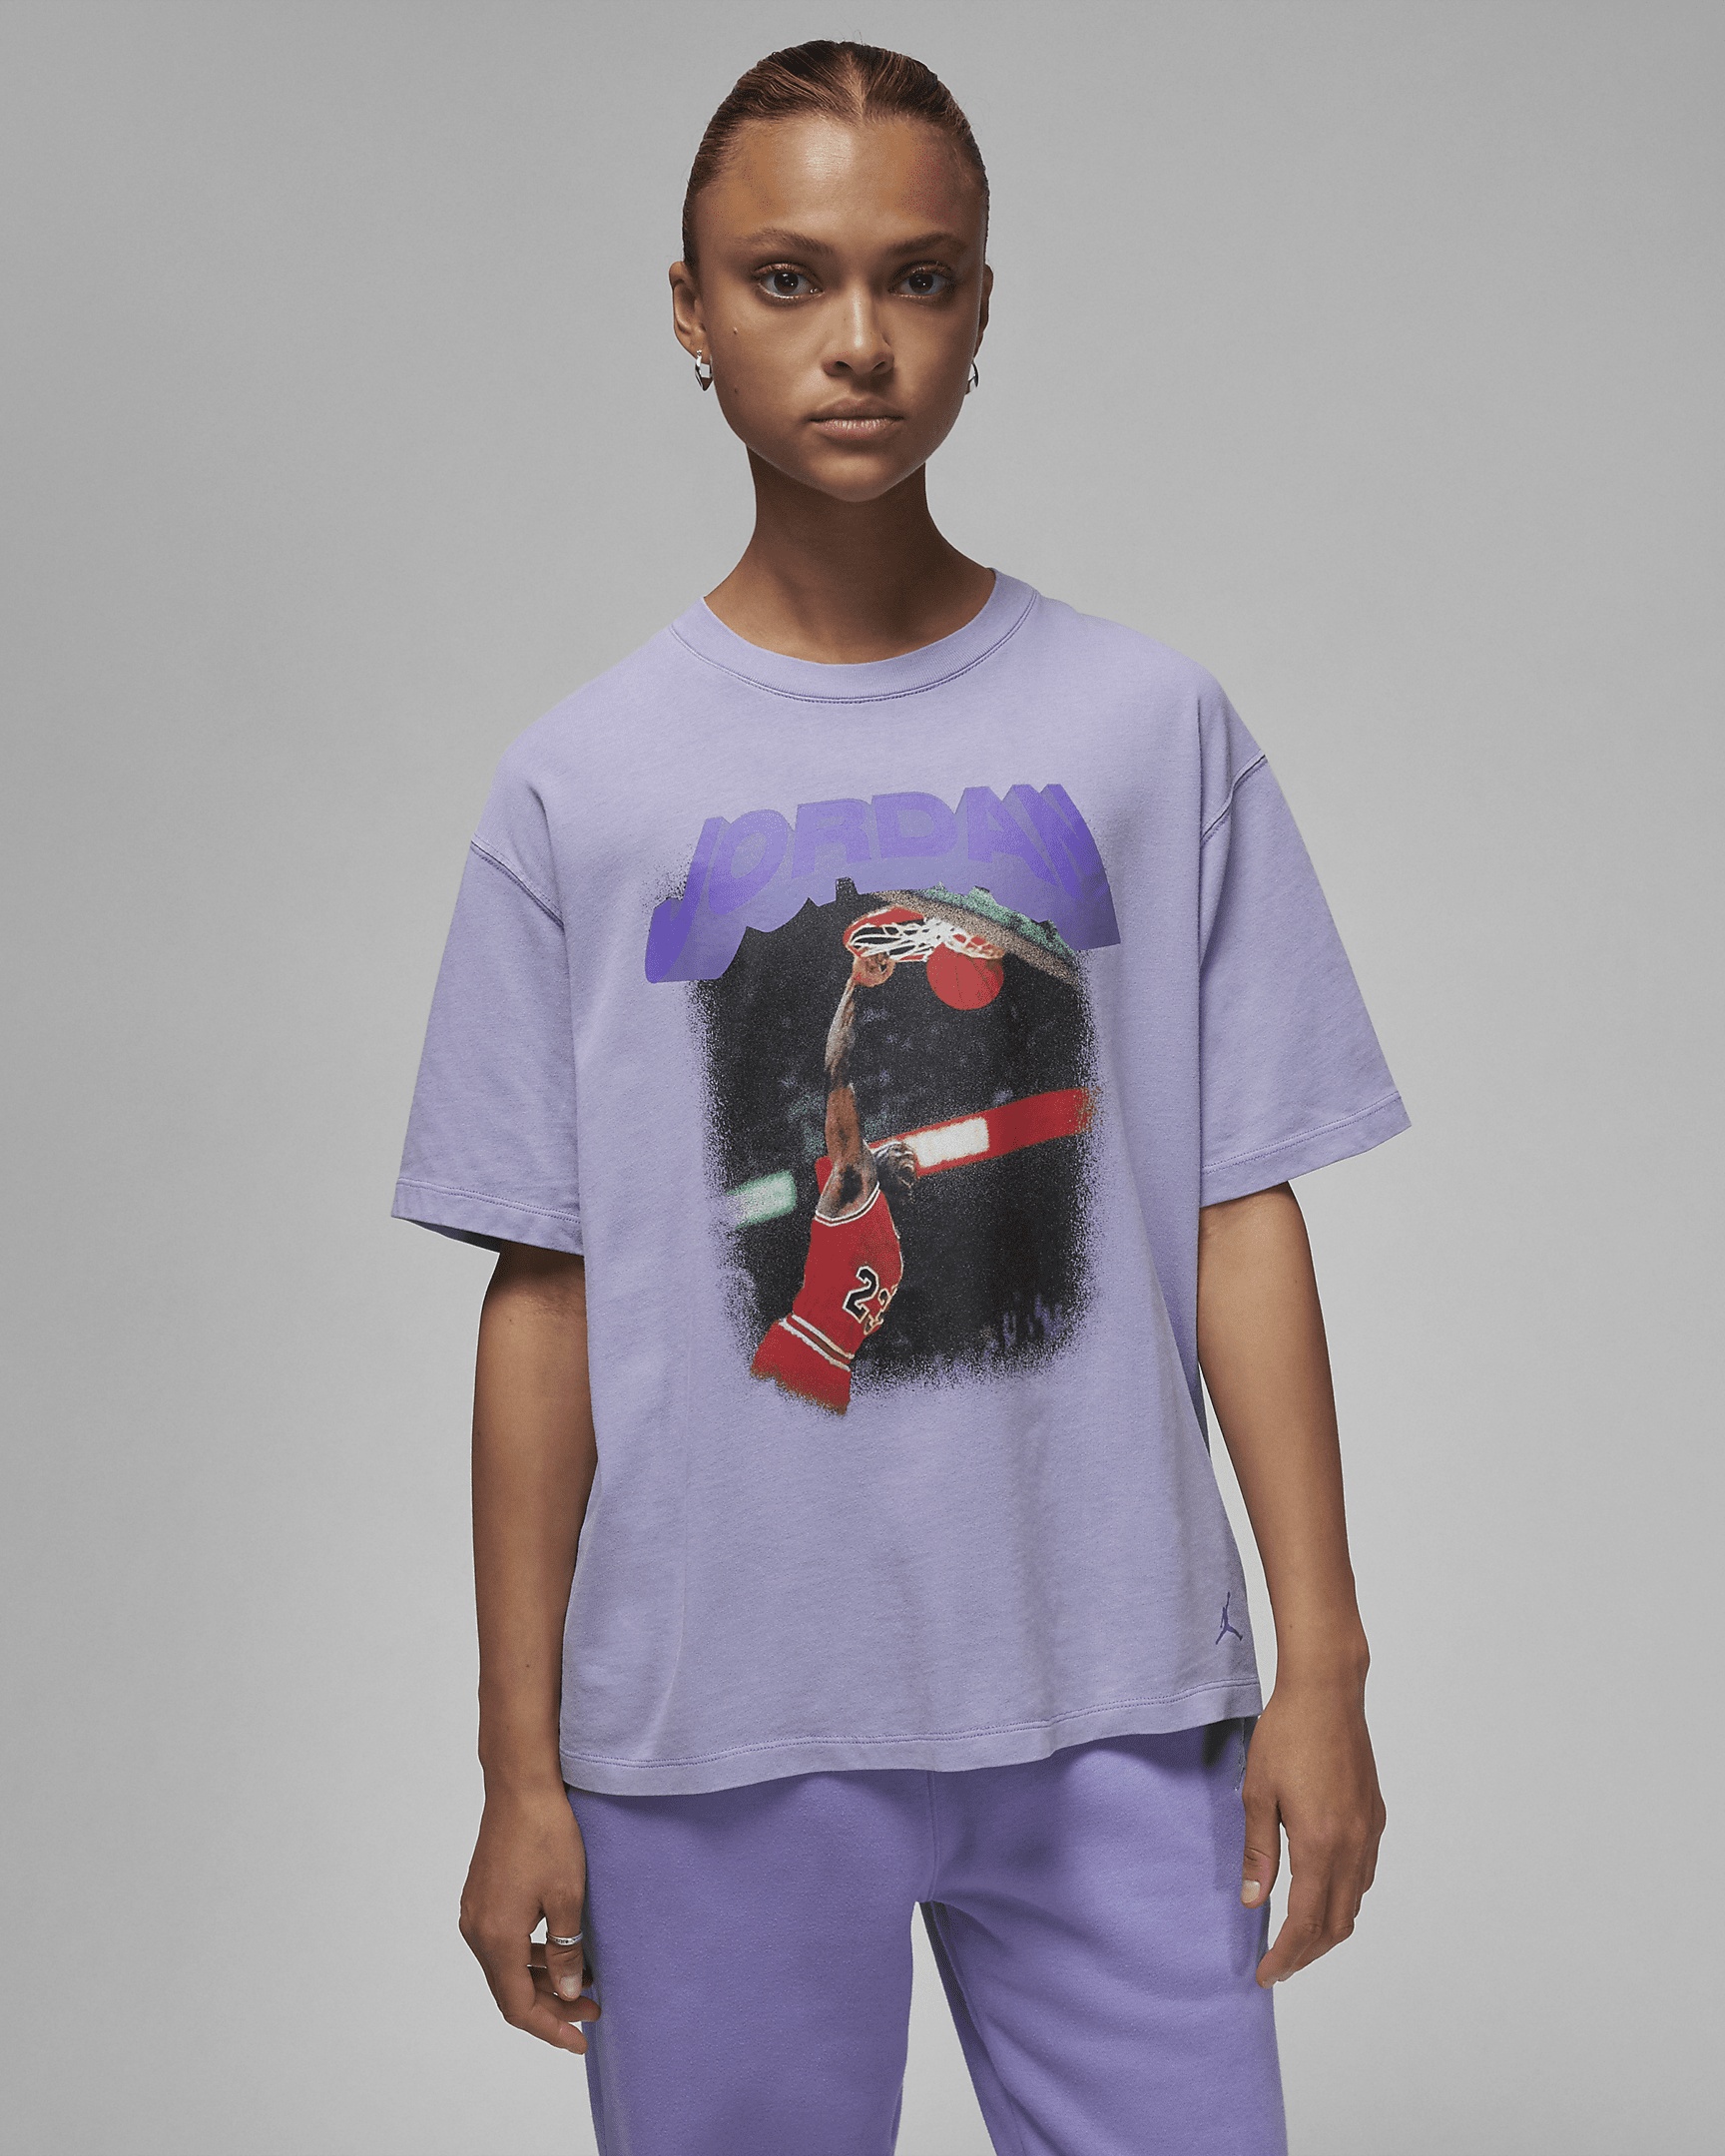 Women's Jordan (Her)itage Graphic T-Shirt - 1